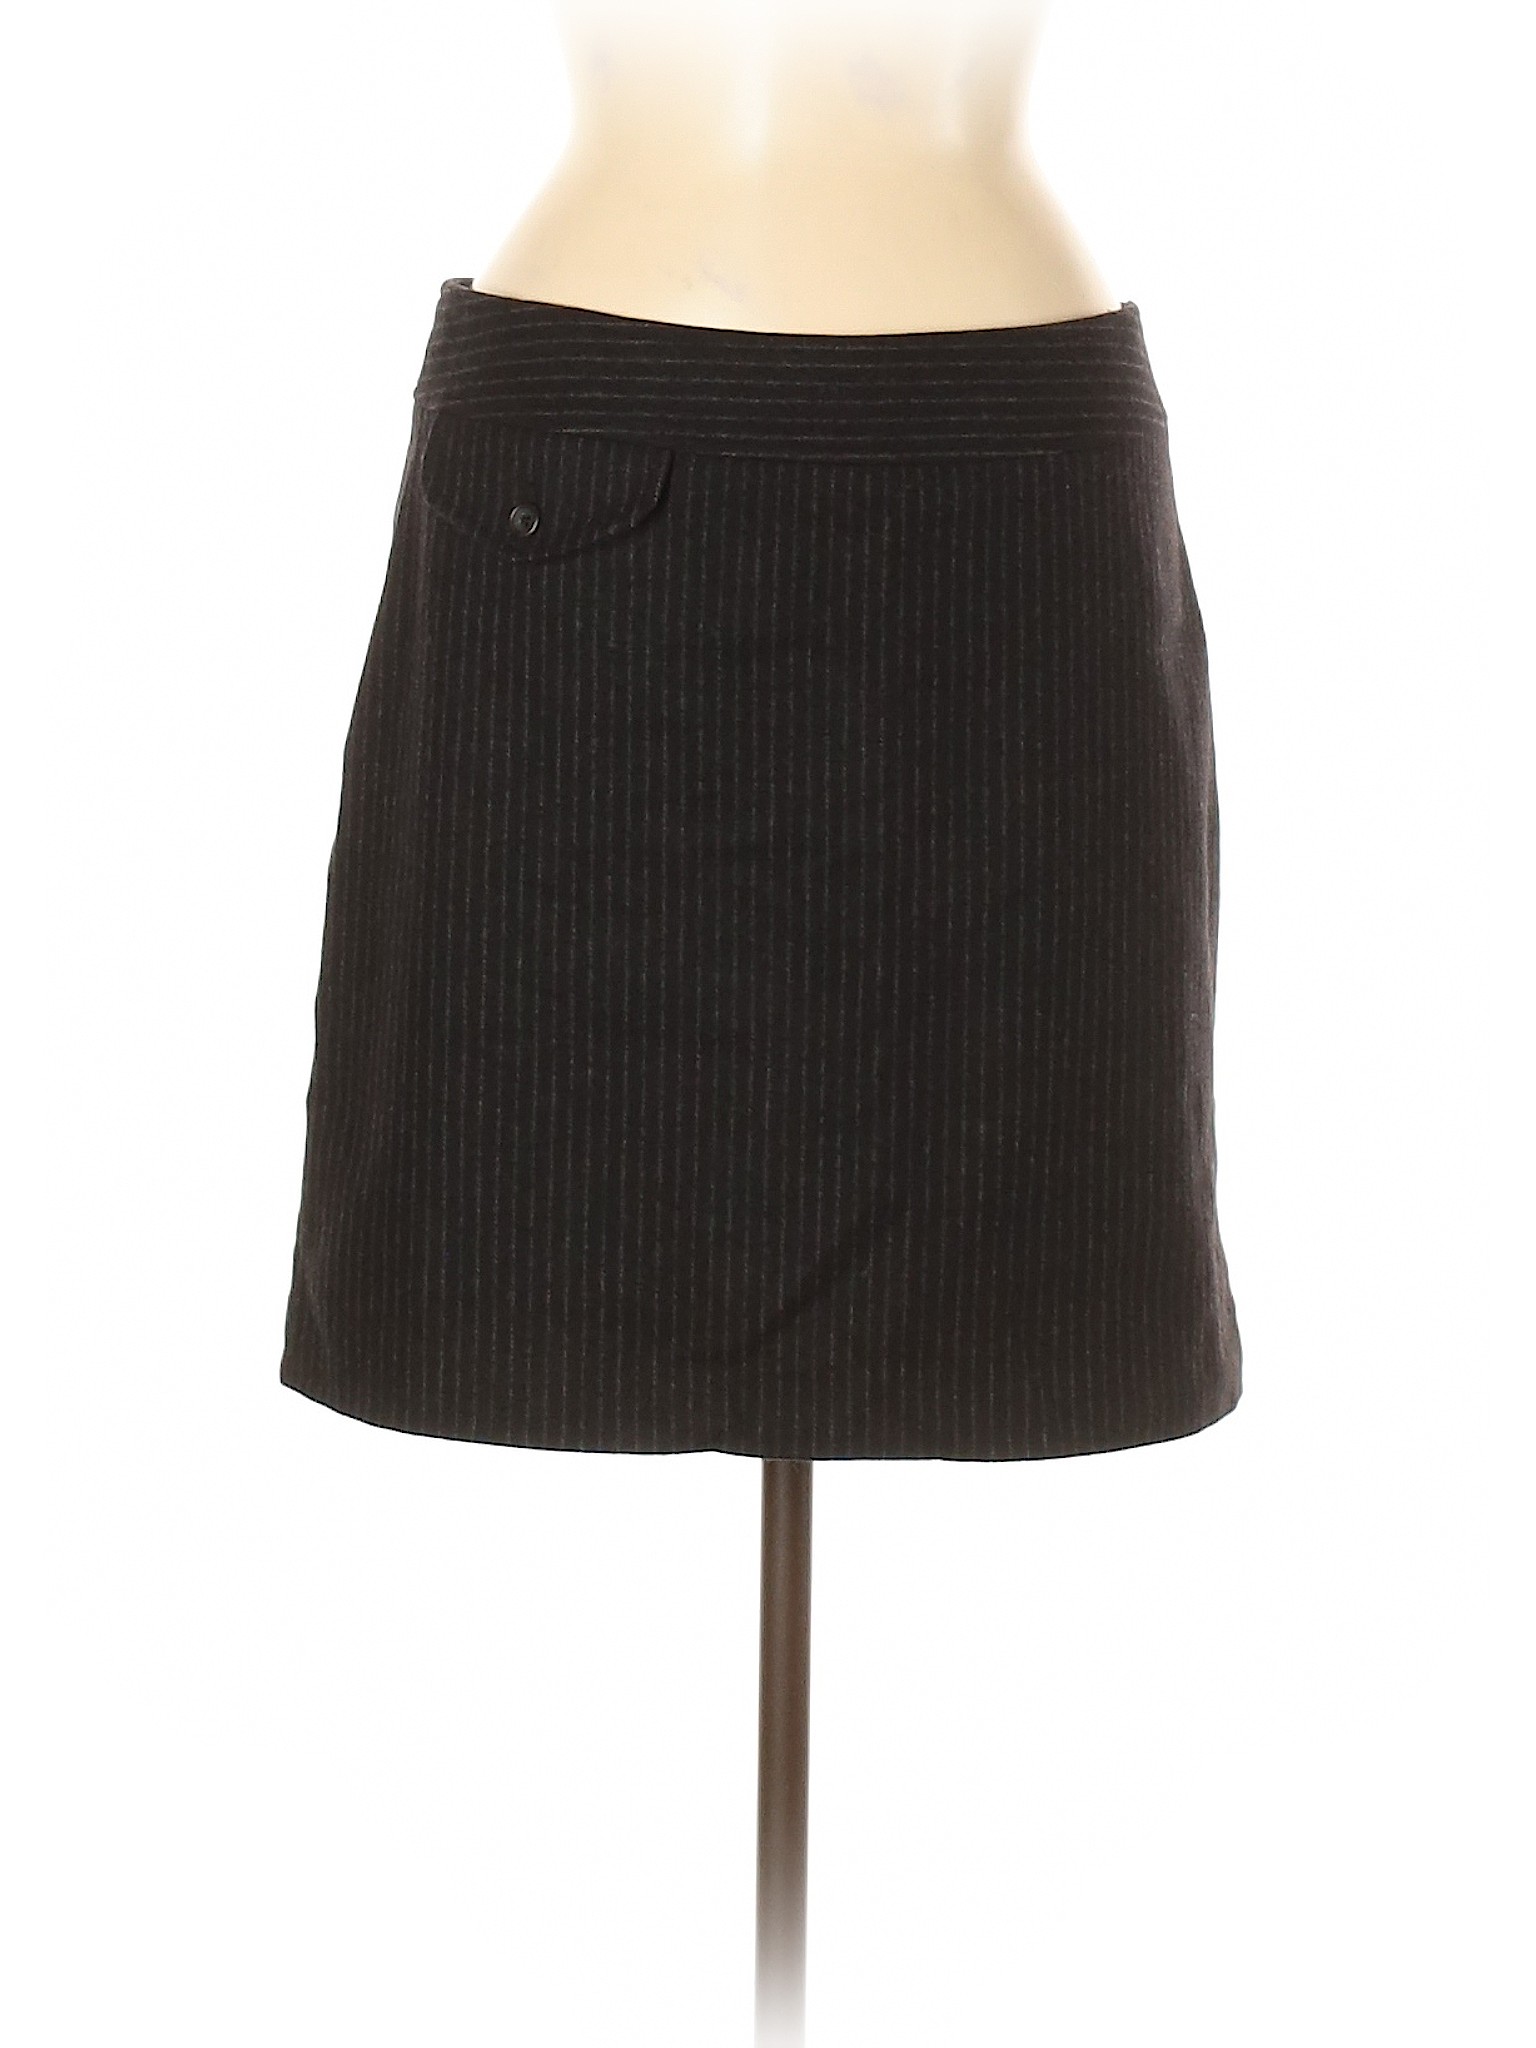 Banana Republic Women Black Wool Skirt 6 | eBay